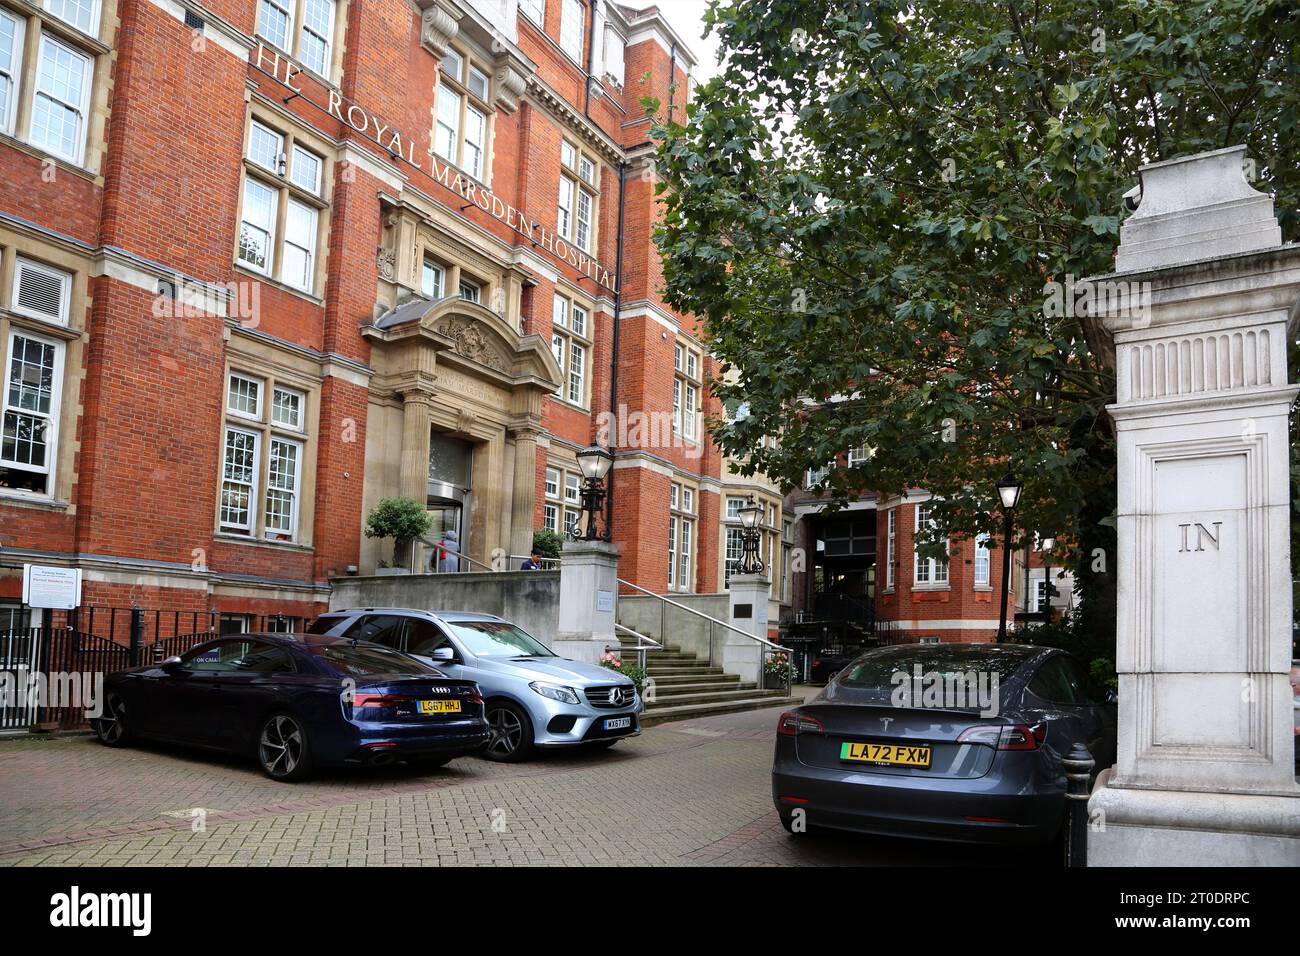 Le Royal Marsden Hospital Fulham Road Londres Angleterre Banque D'Images